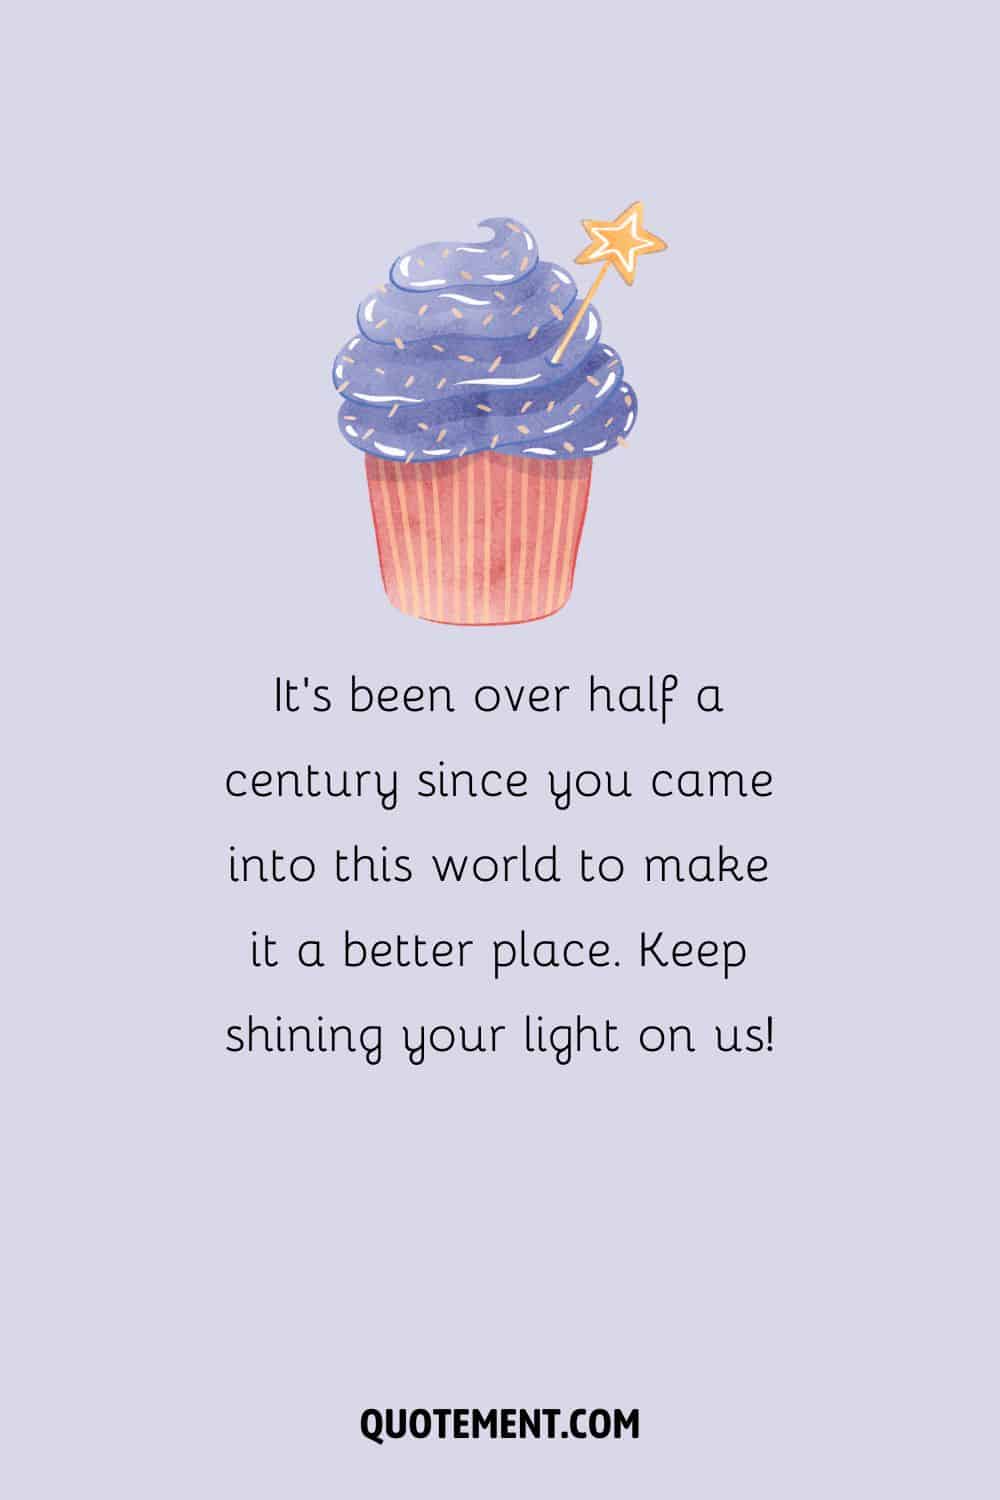 birthday cupcake illustration representing happy 52nd birthday wish
